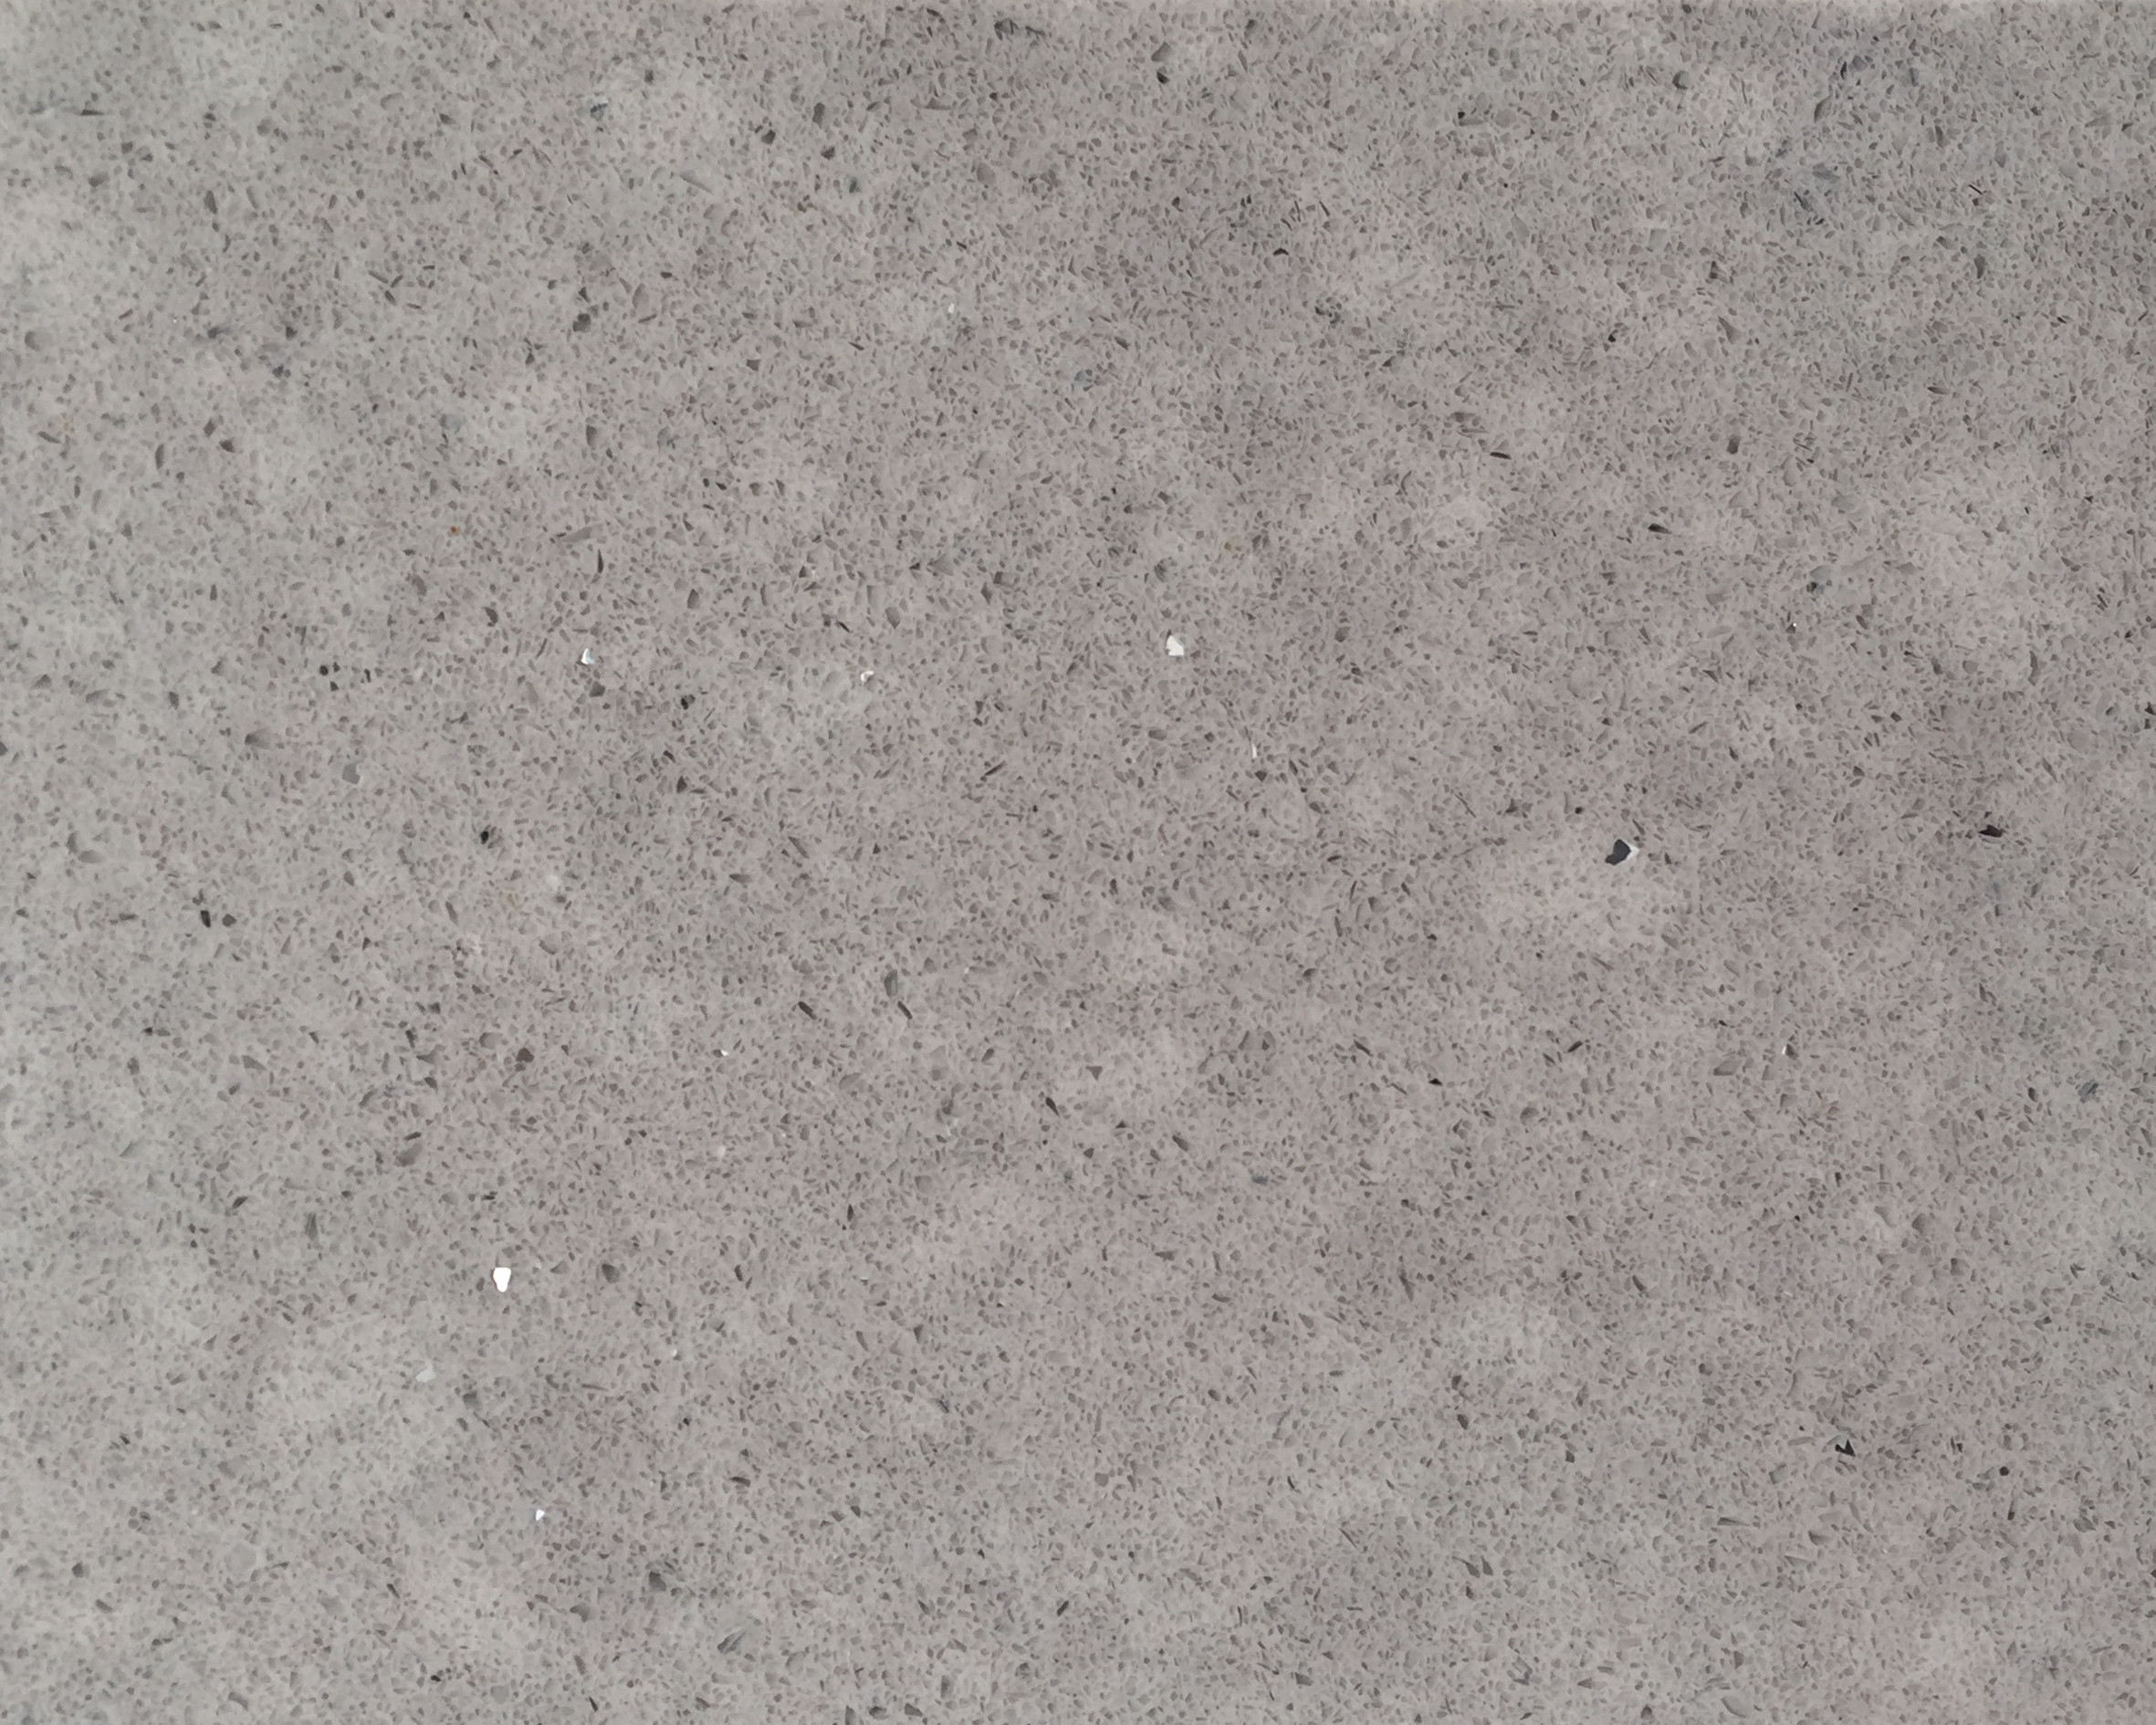 DL-12205 Little Star Grey Quartz Slab Counter Top 